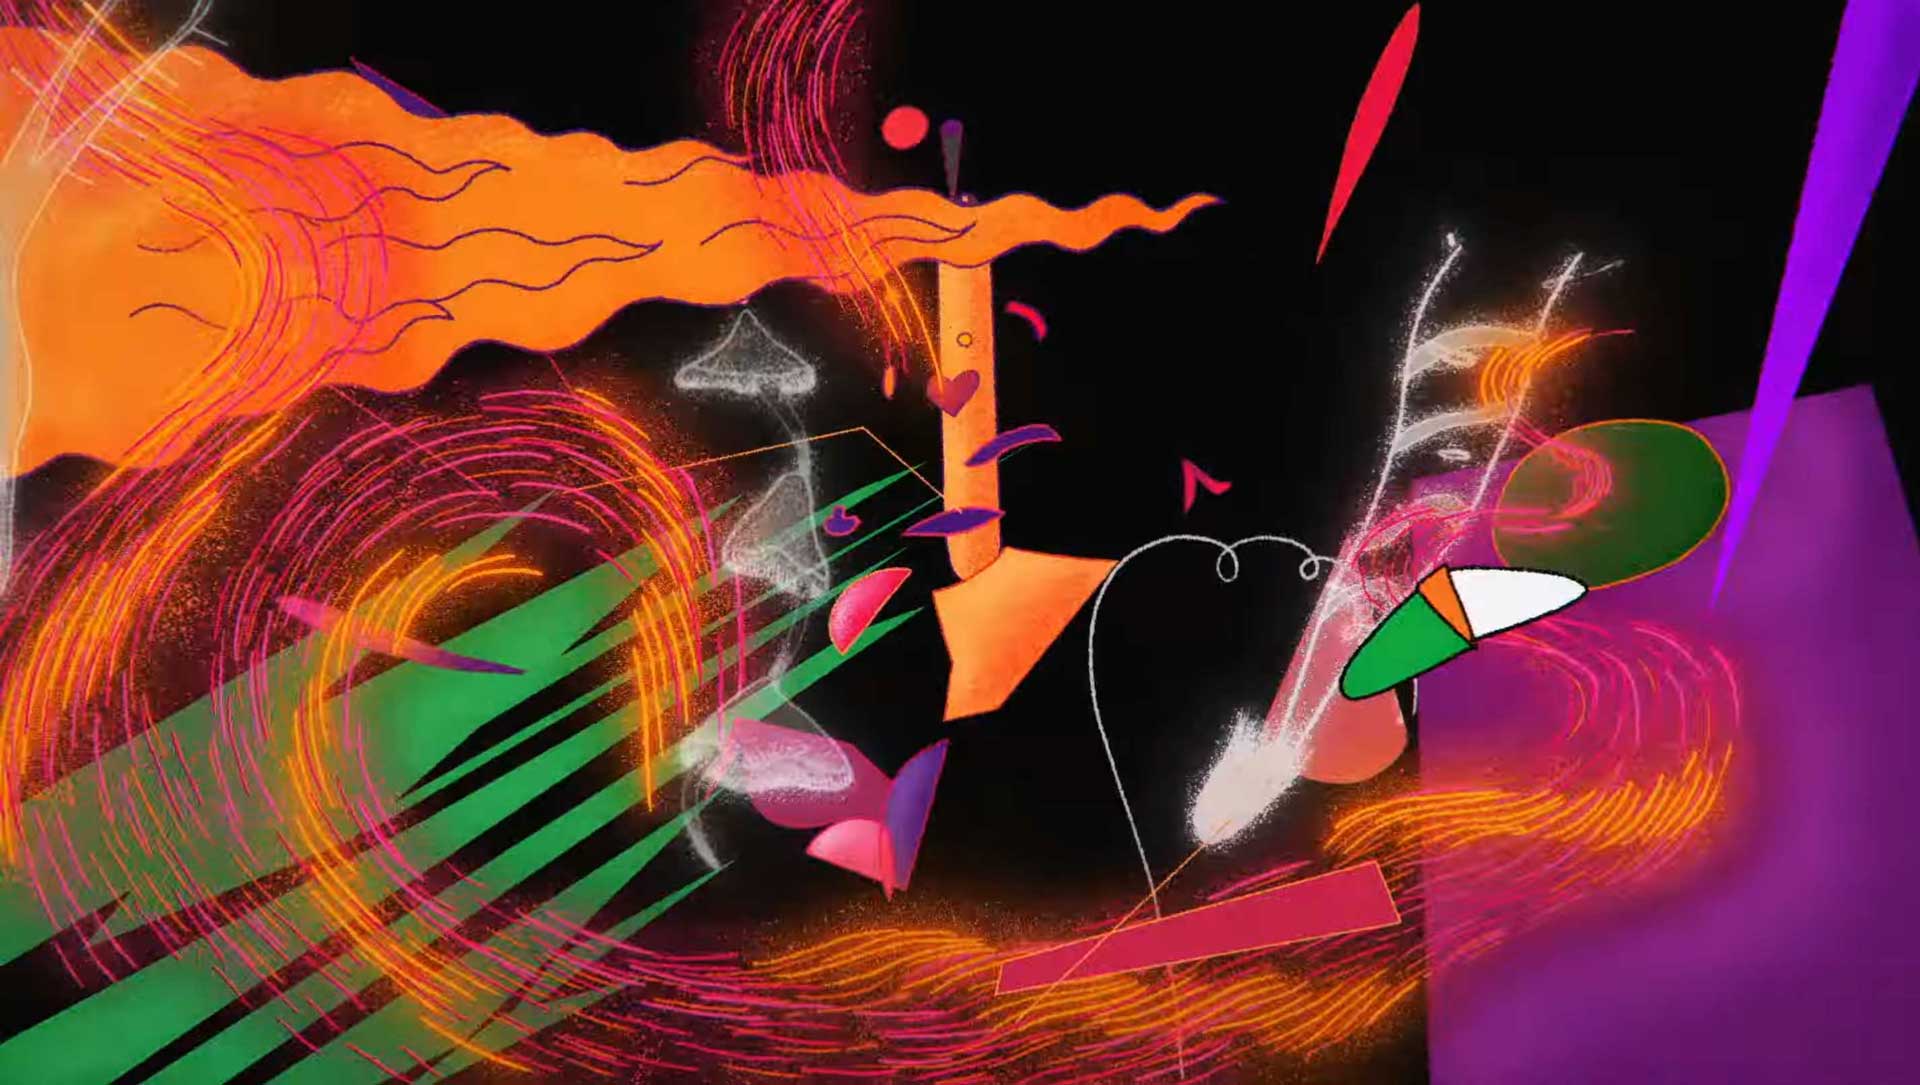 Miles Davis Whats Love Got To Do With It Music Video Irina Rubina | STASH MAGAZINE